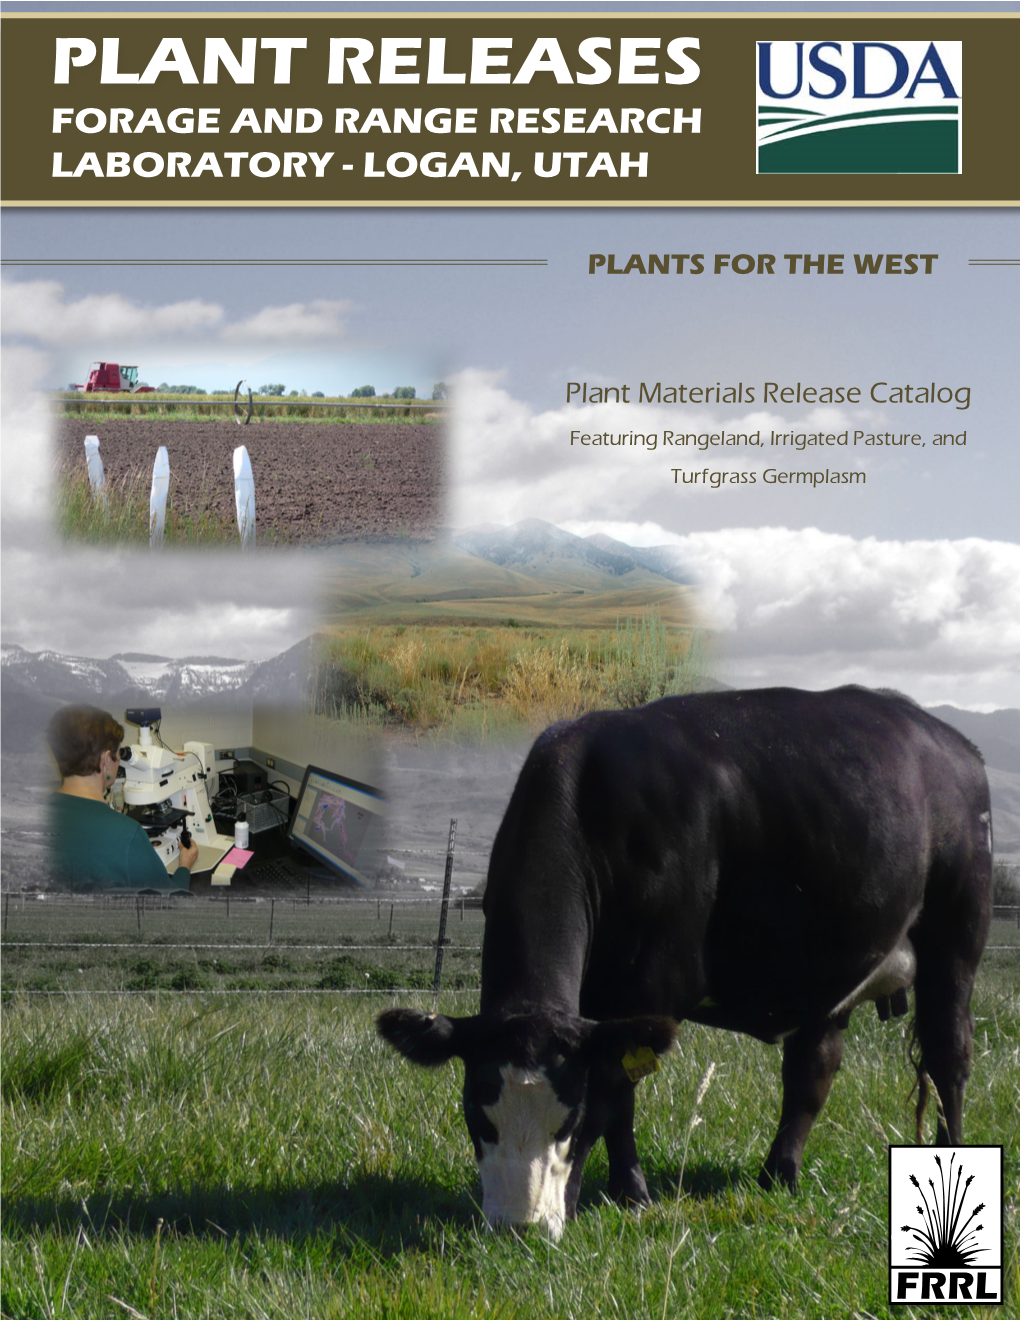 Plant Releases Forage and Range Research Laboratory - Logan, Utah